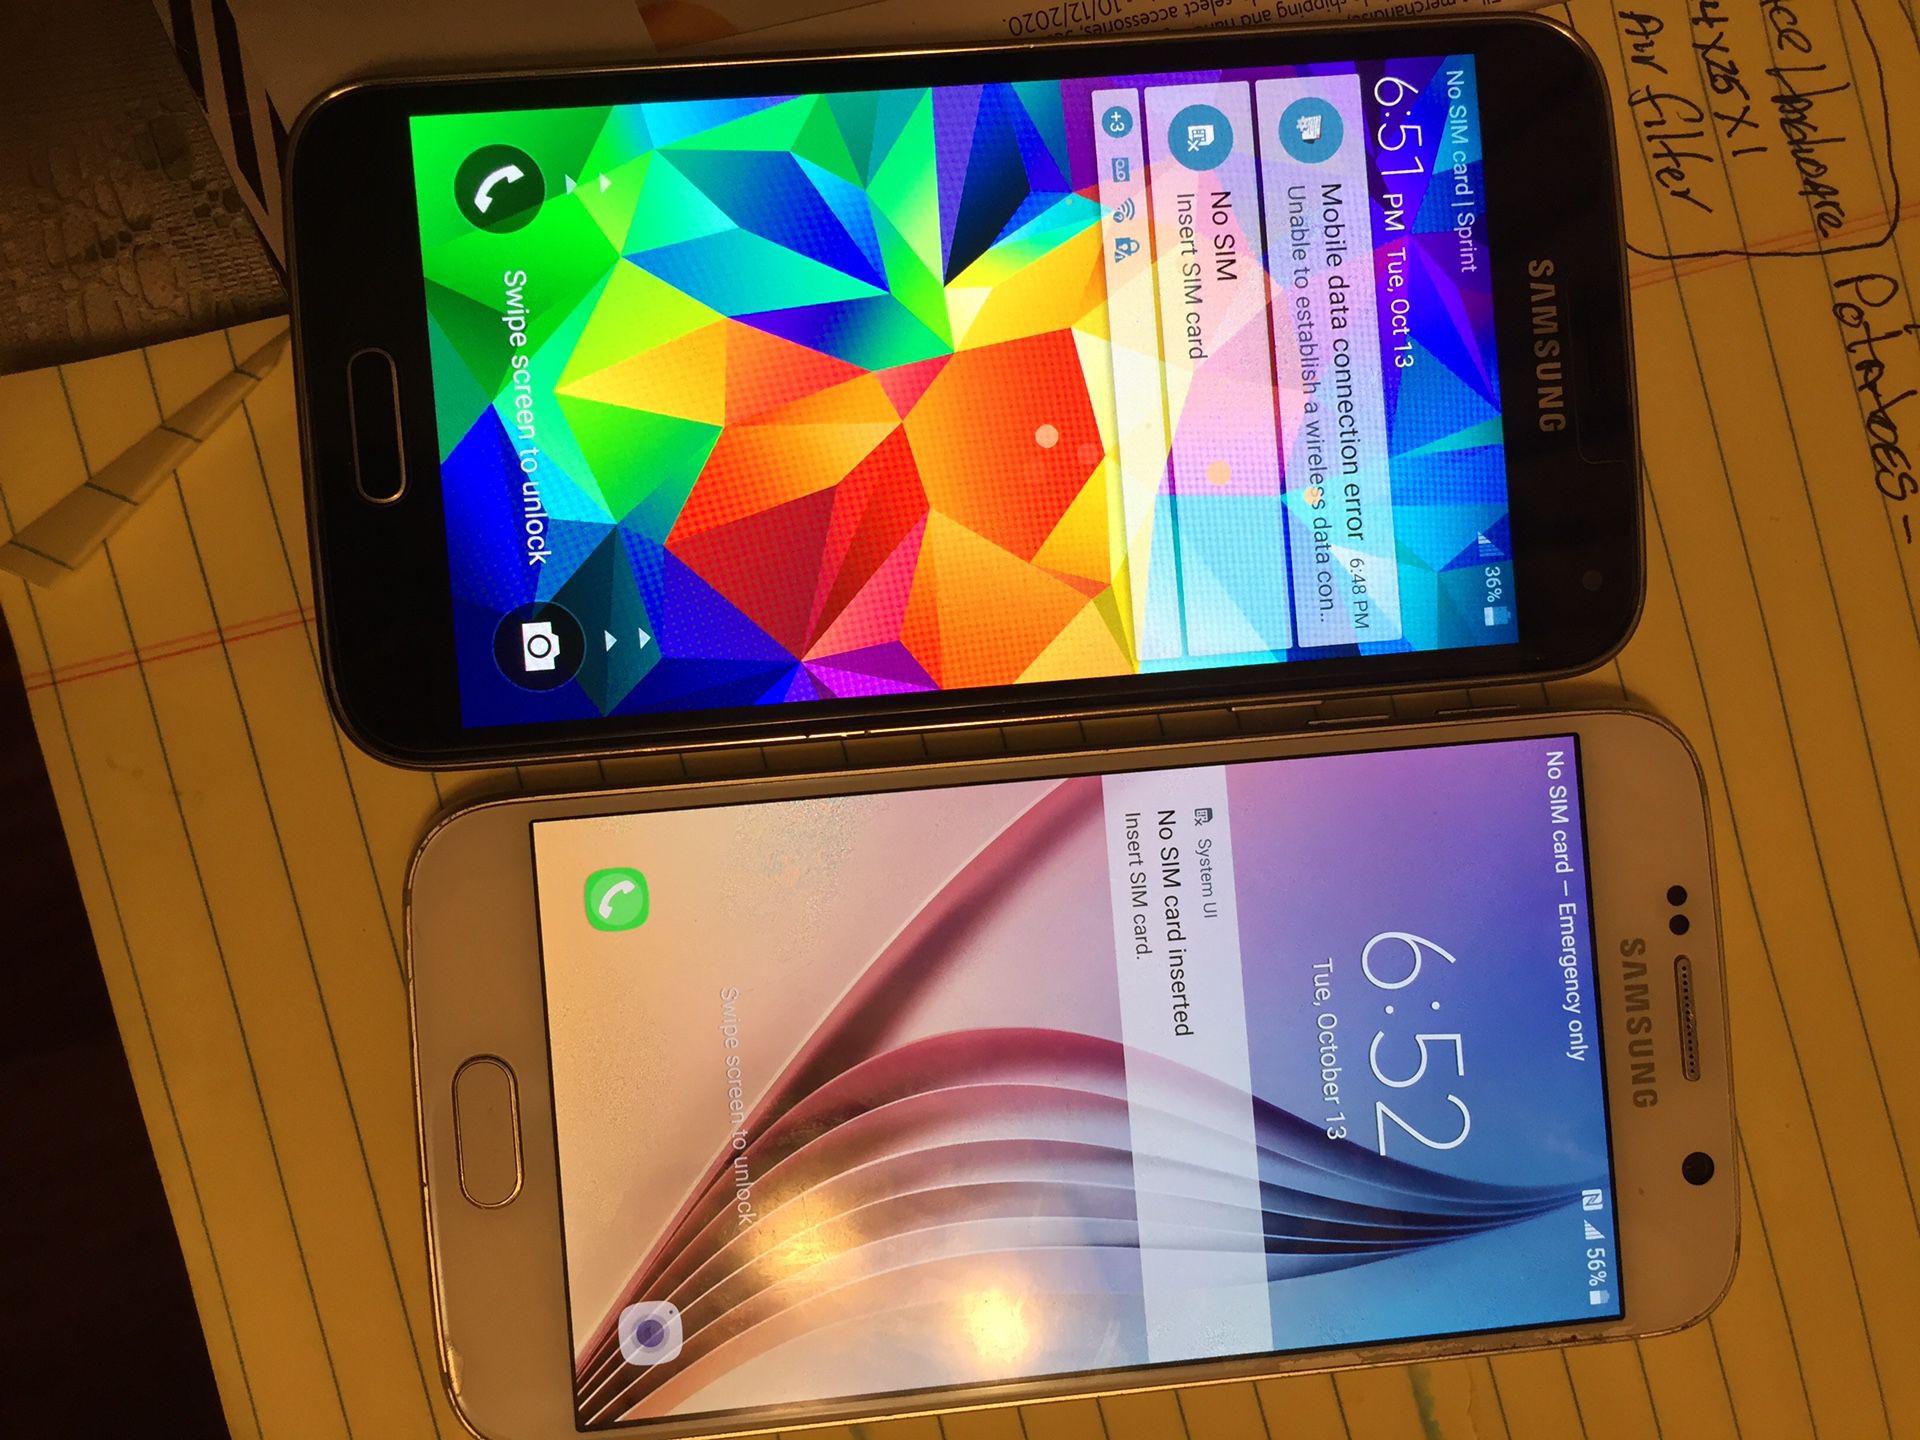 (2) Samsung Galaxy & Android Unlocked phones $200